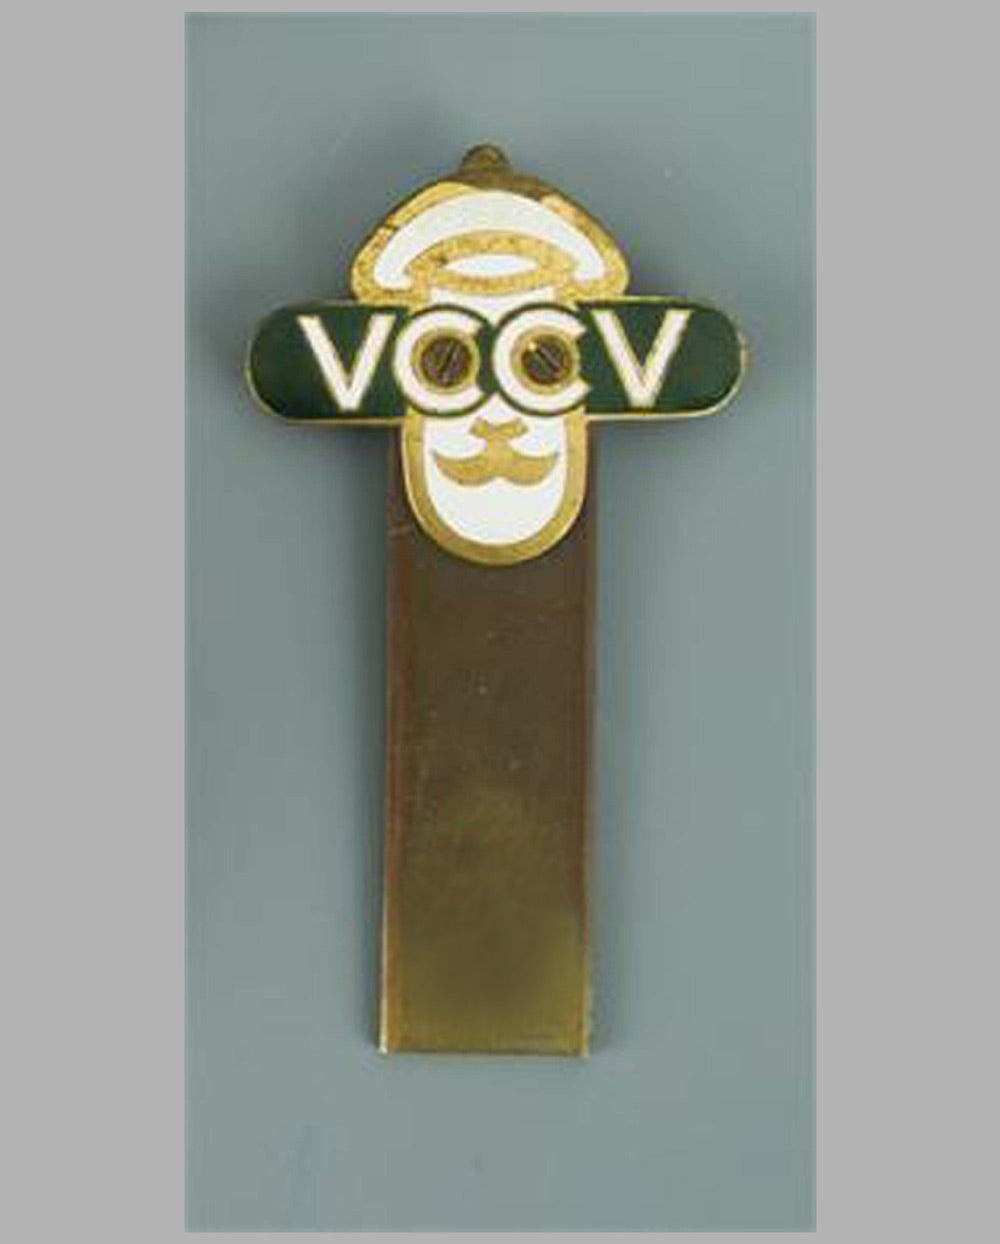 VCCV - Vintage Car Club of Australia member’s badge